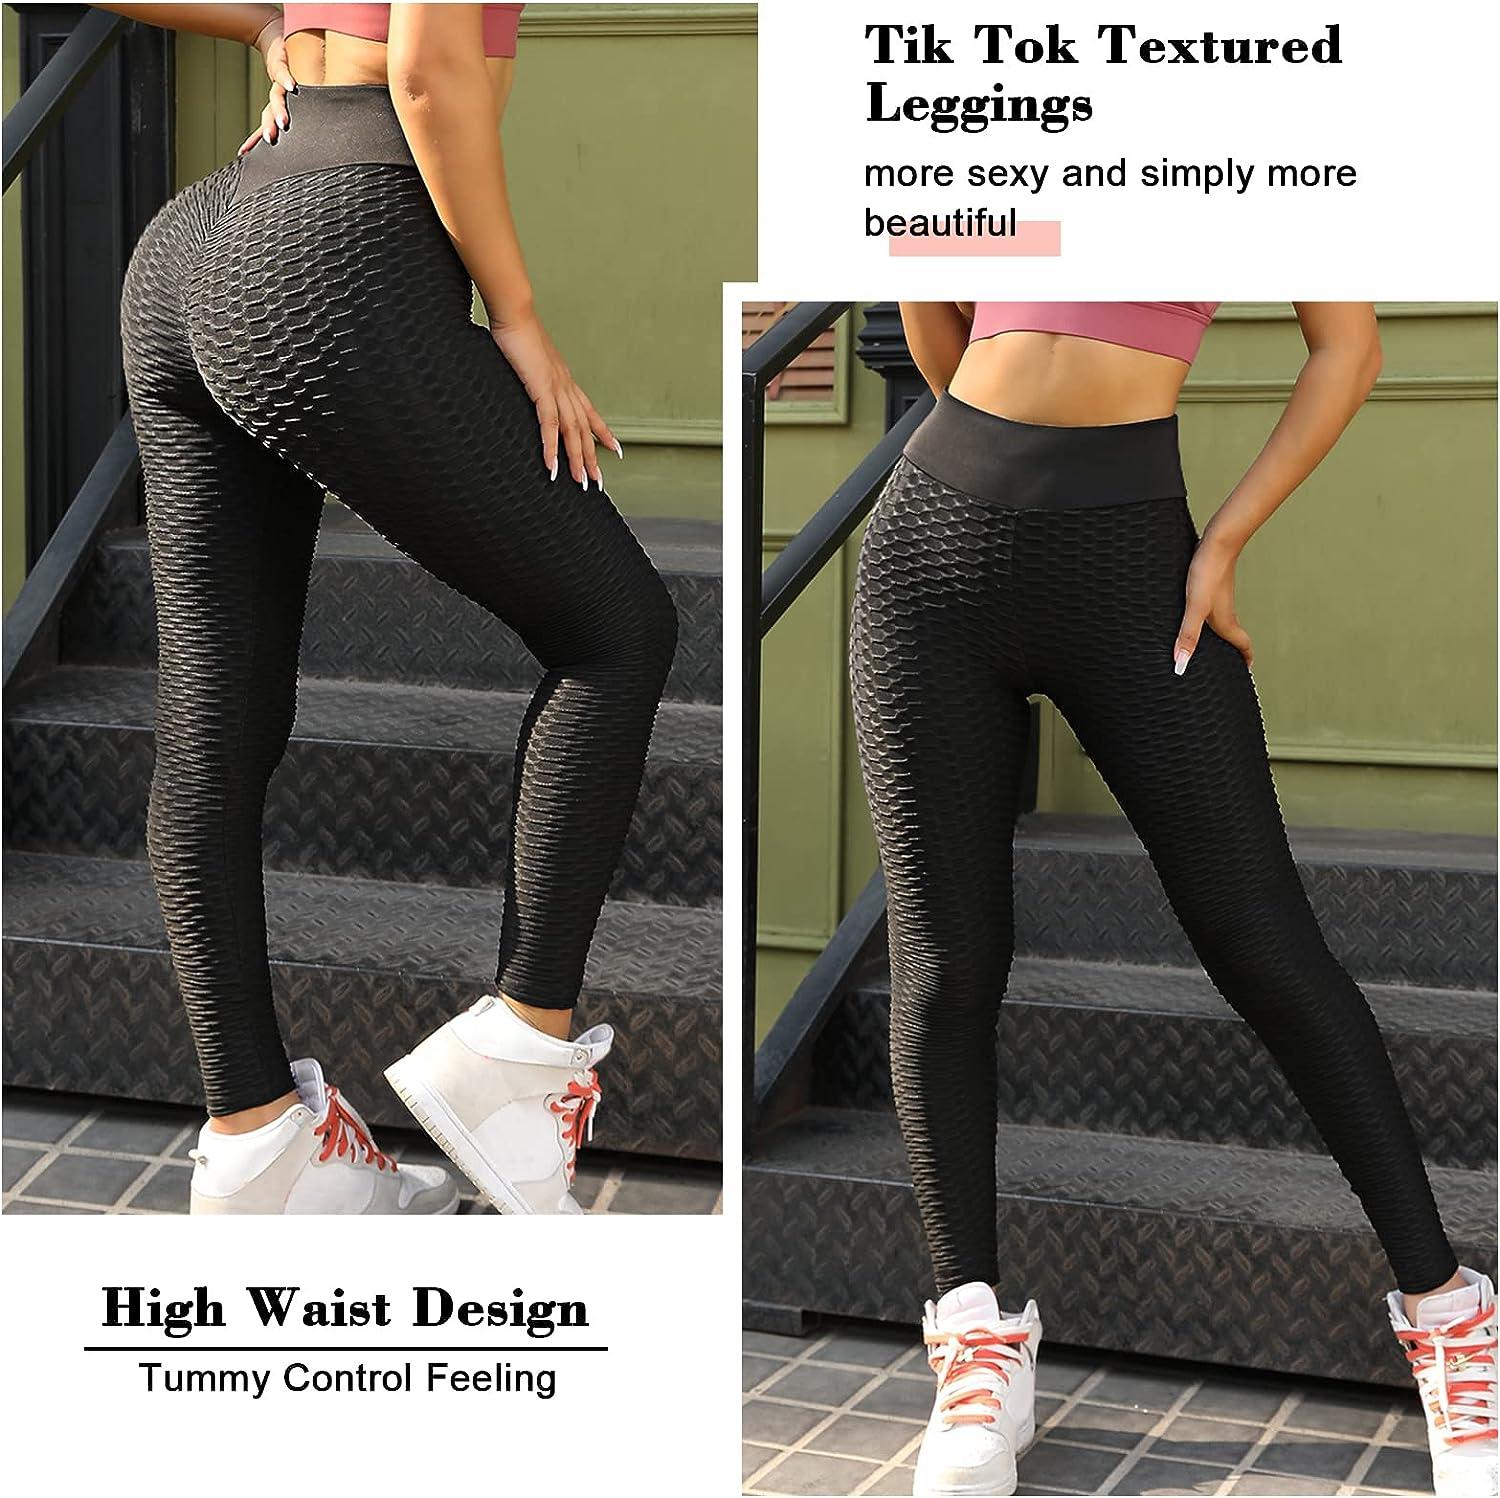 wearing tik tok leggings in public｜TikTok Search